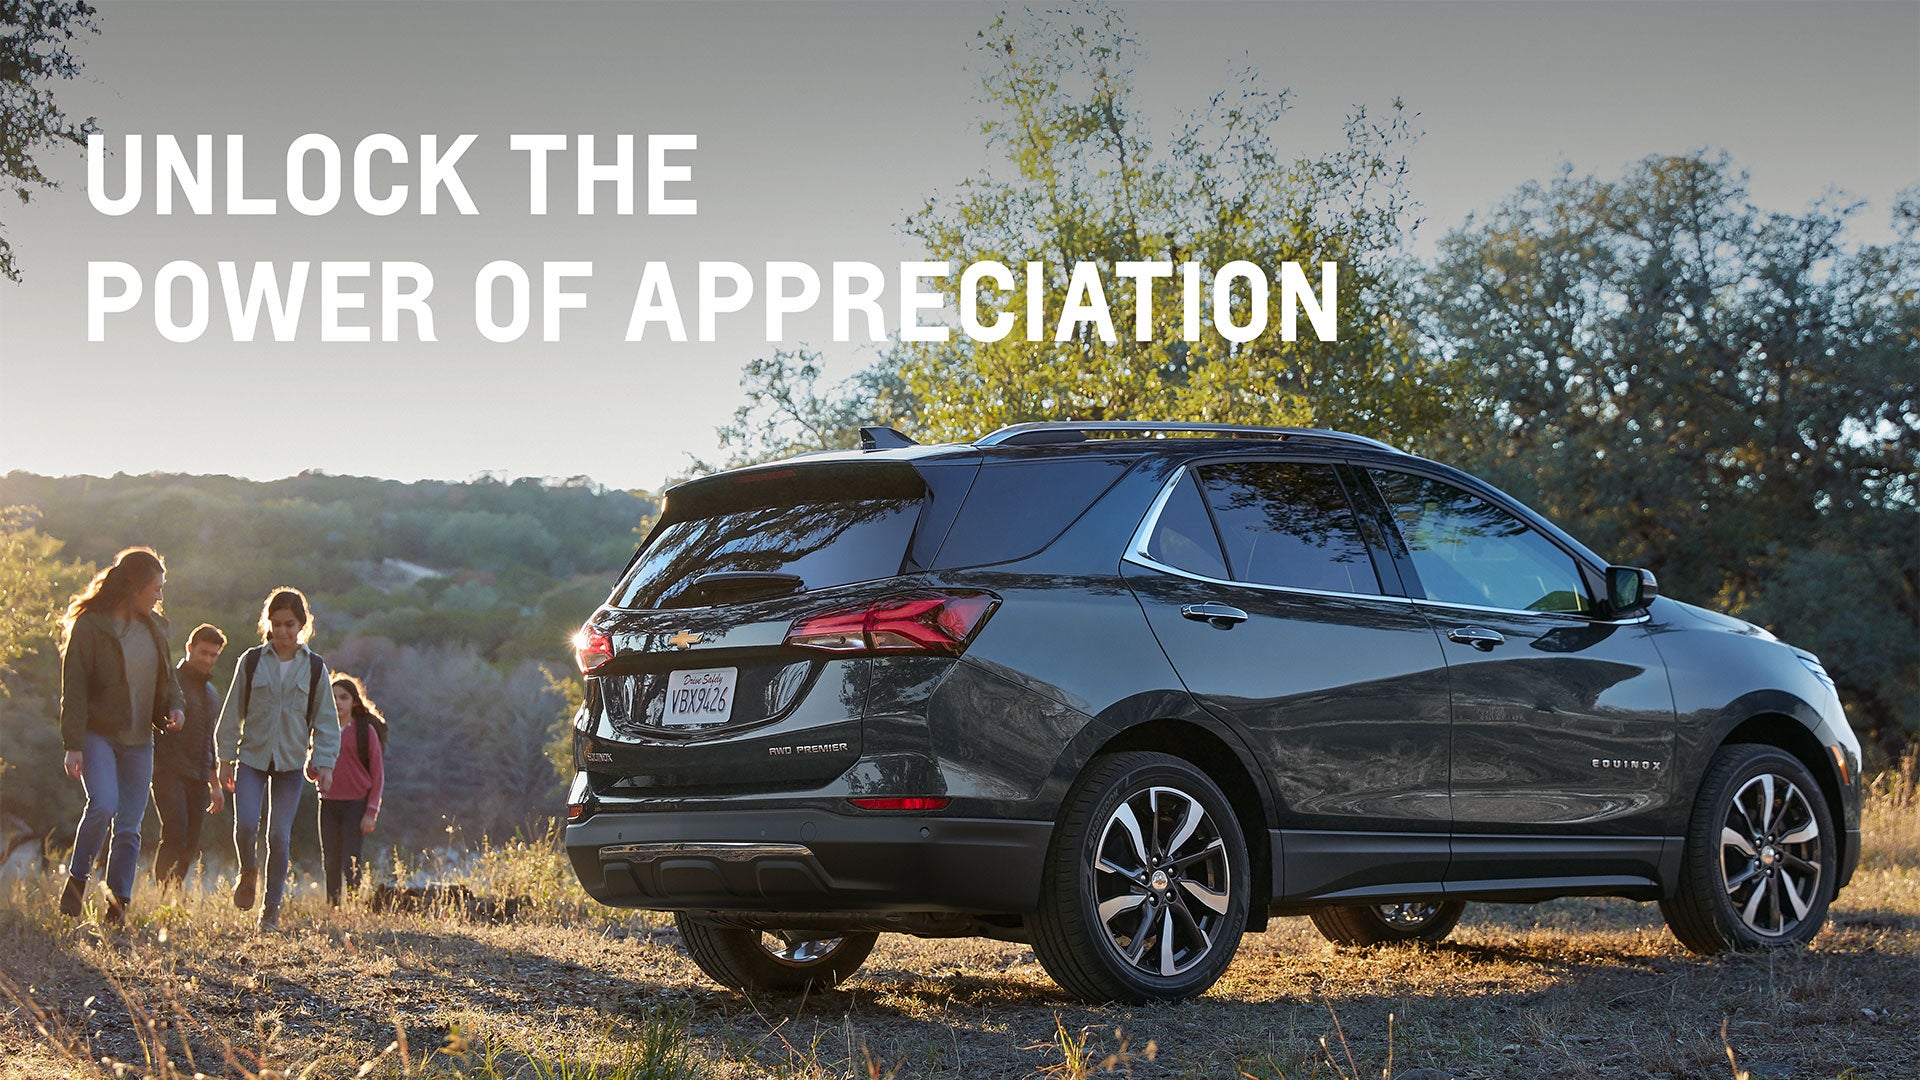 Unlock the power of appreciation | Sport Chevrolet in Silver Spring MD